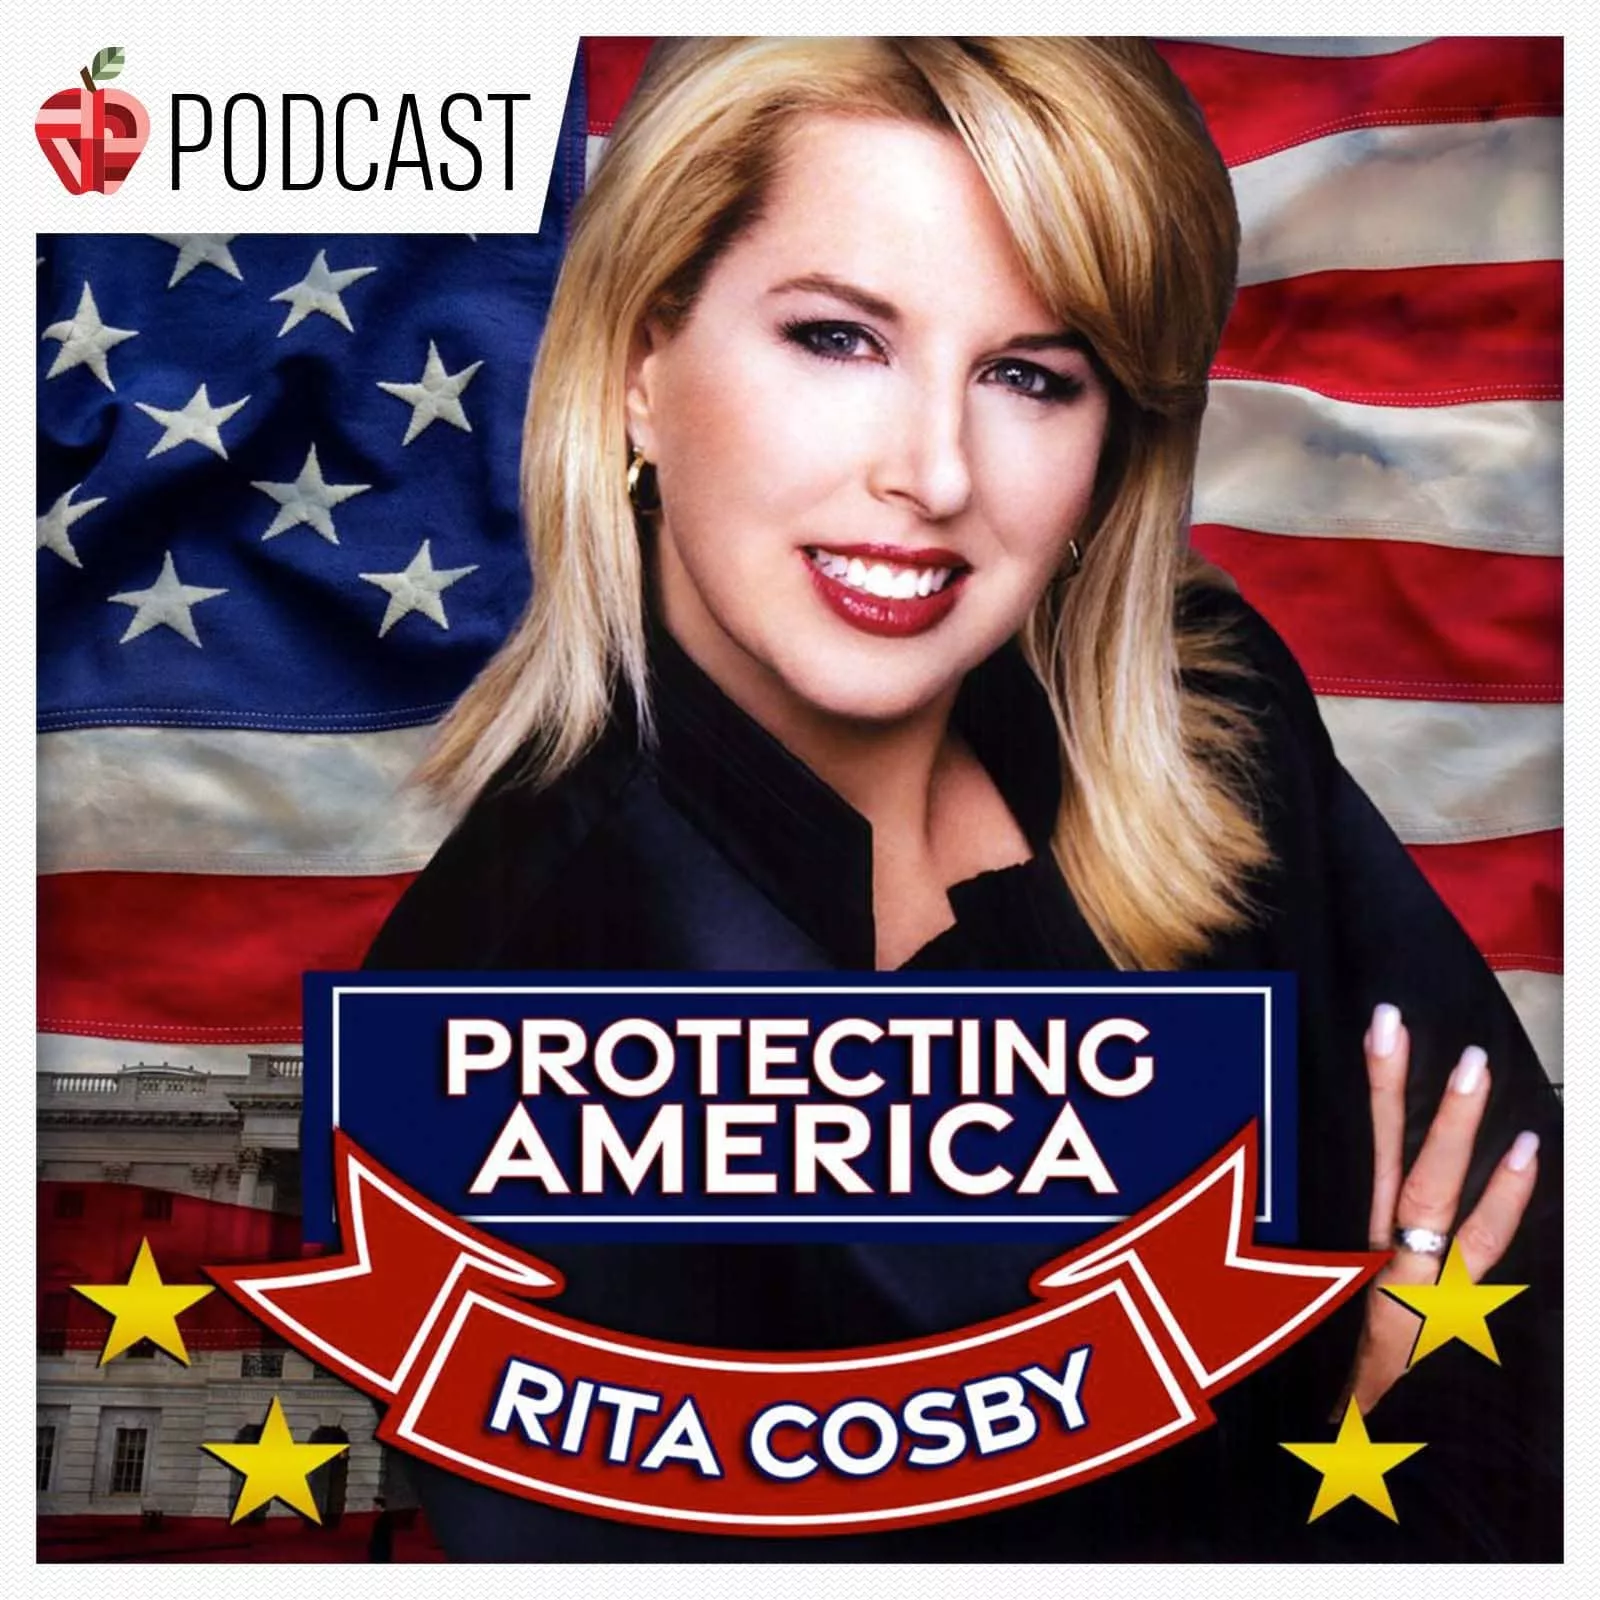 rita-cosby-protecting-america-correct-podcast-new-logo728662